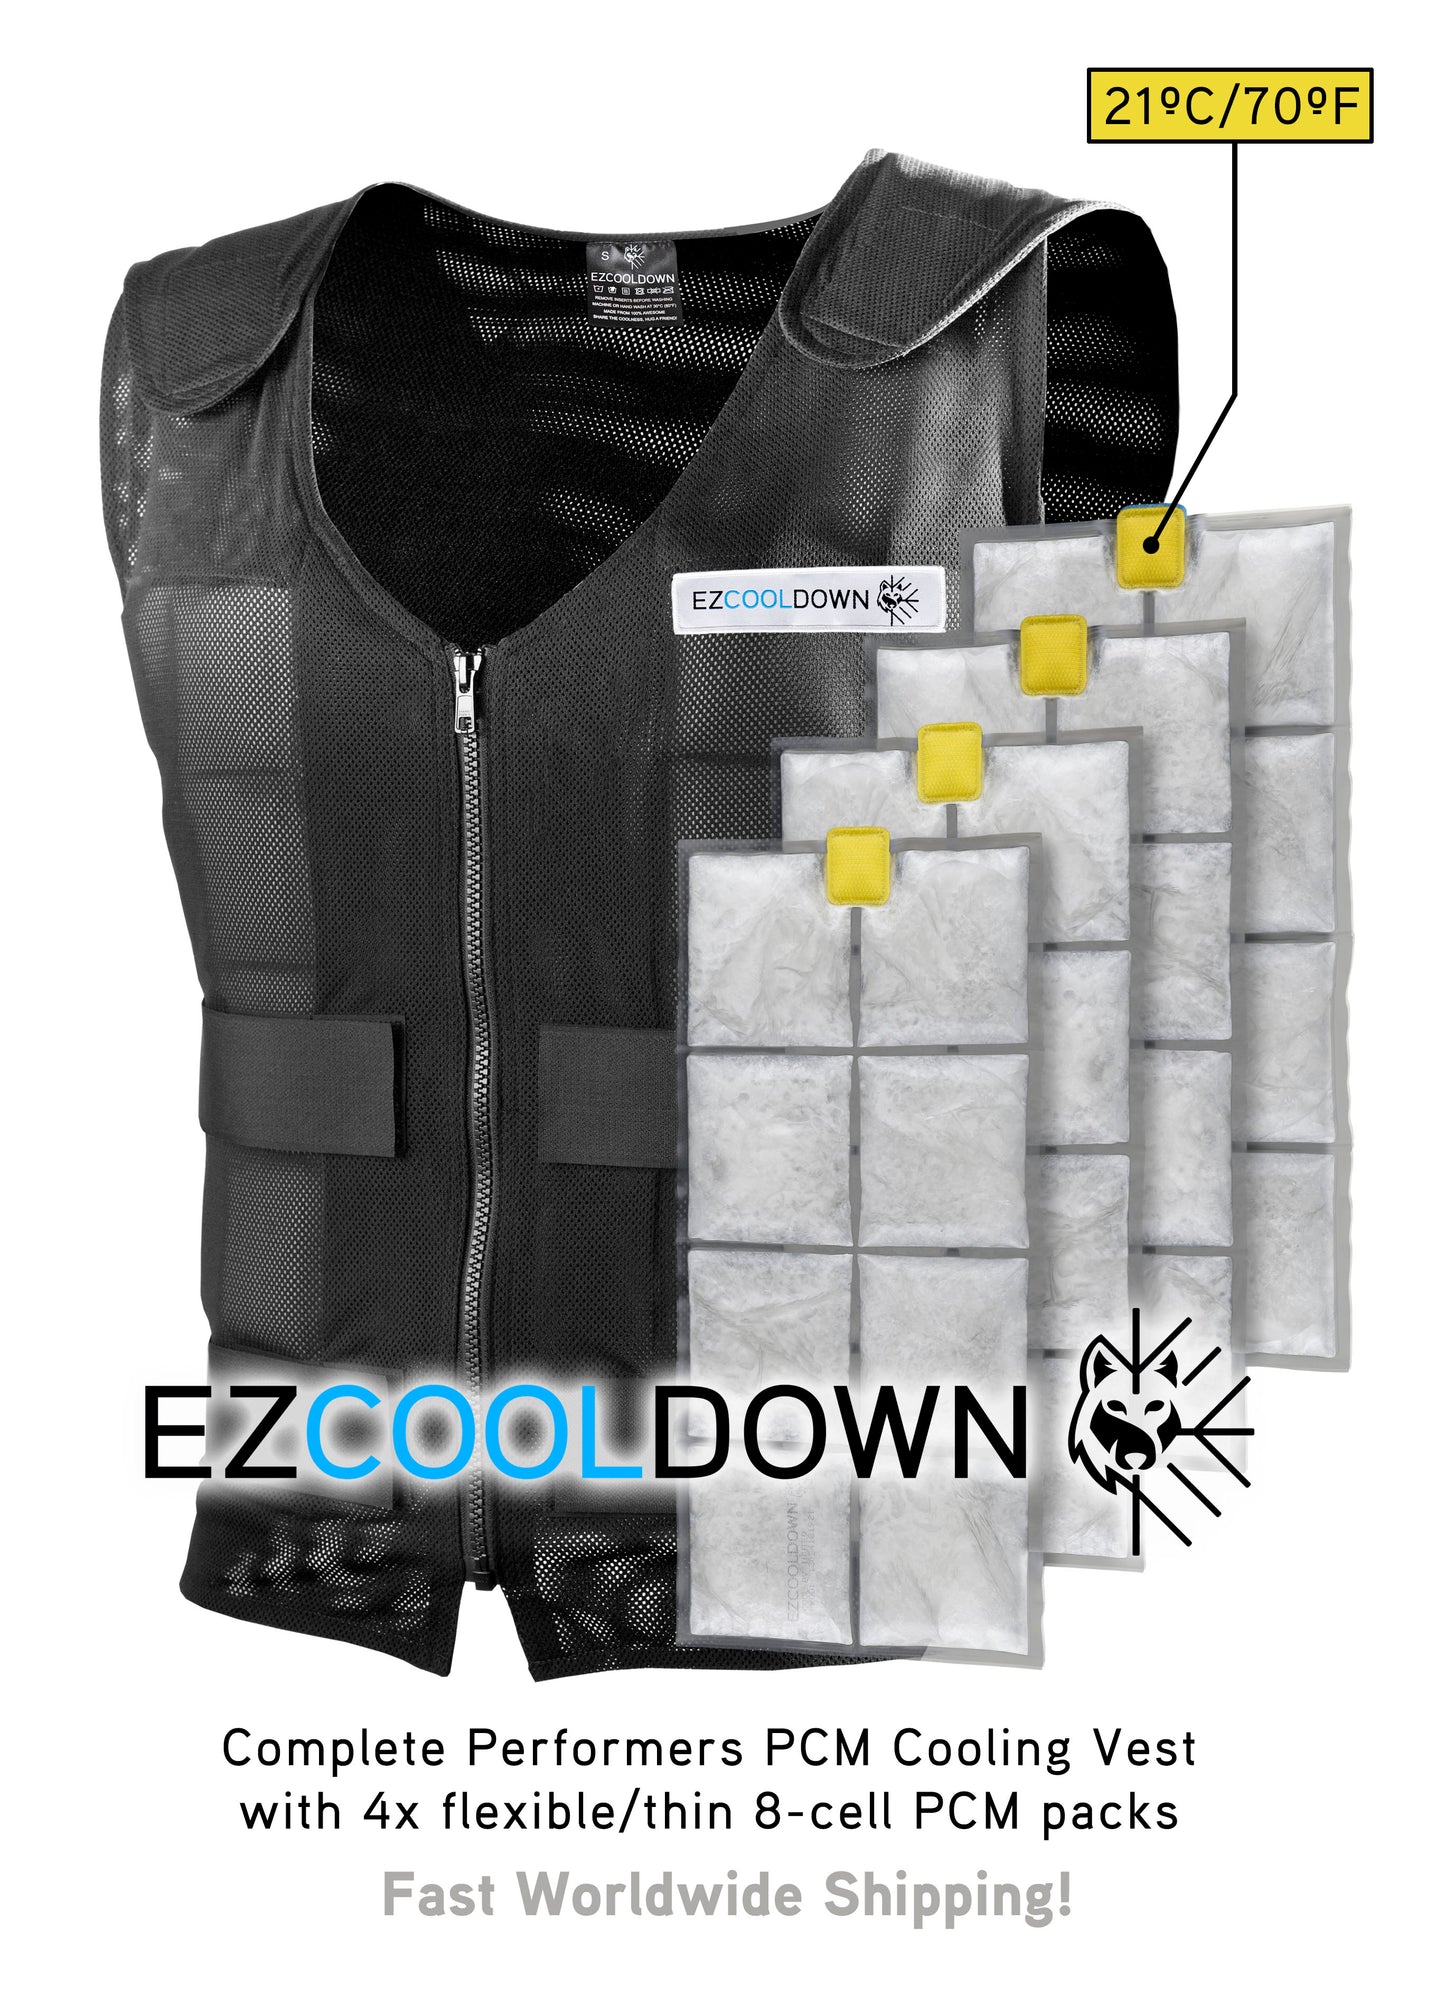 Complete Performers Cooling Vest